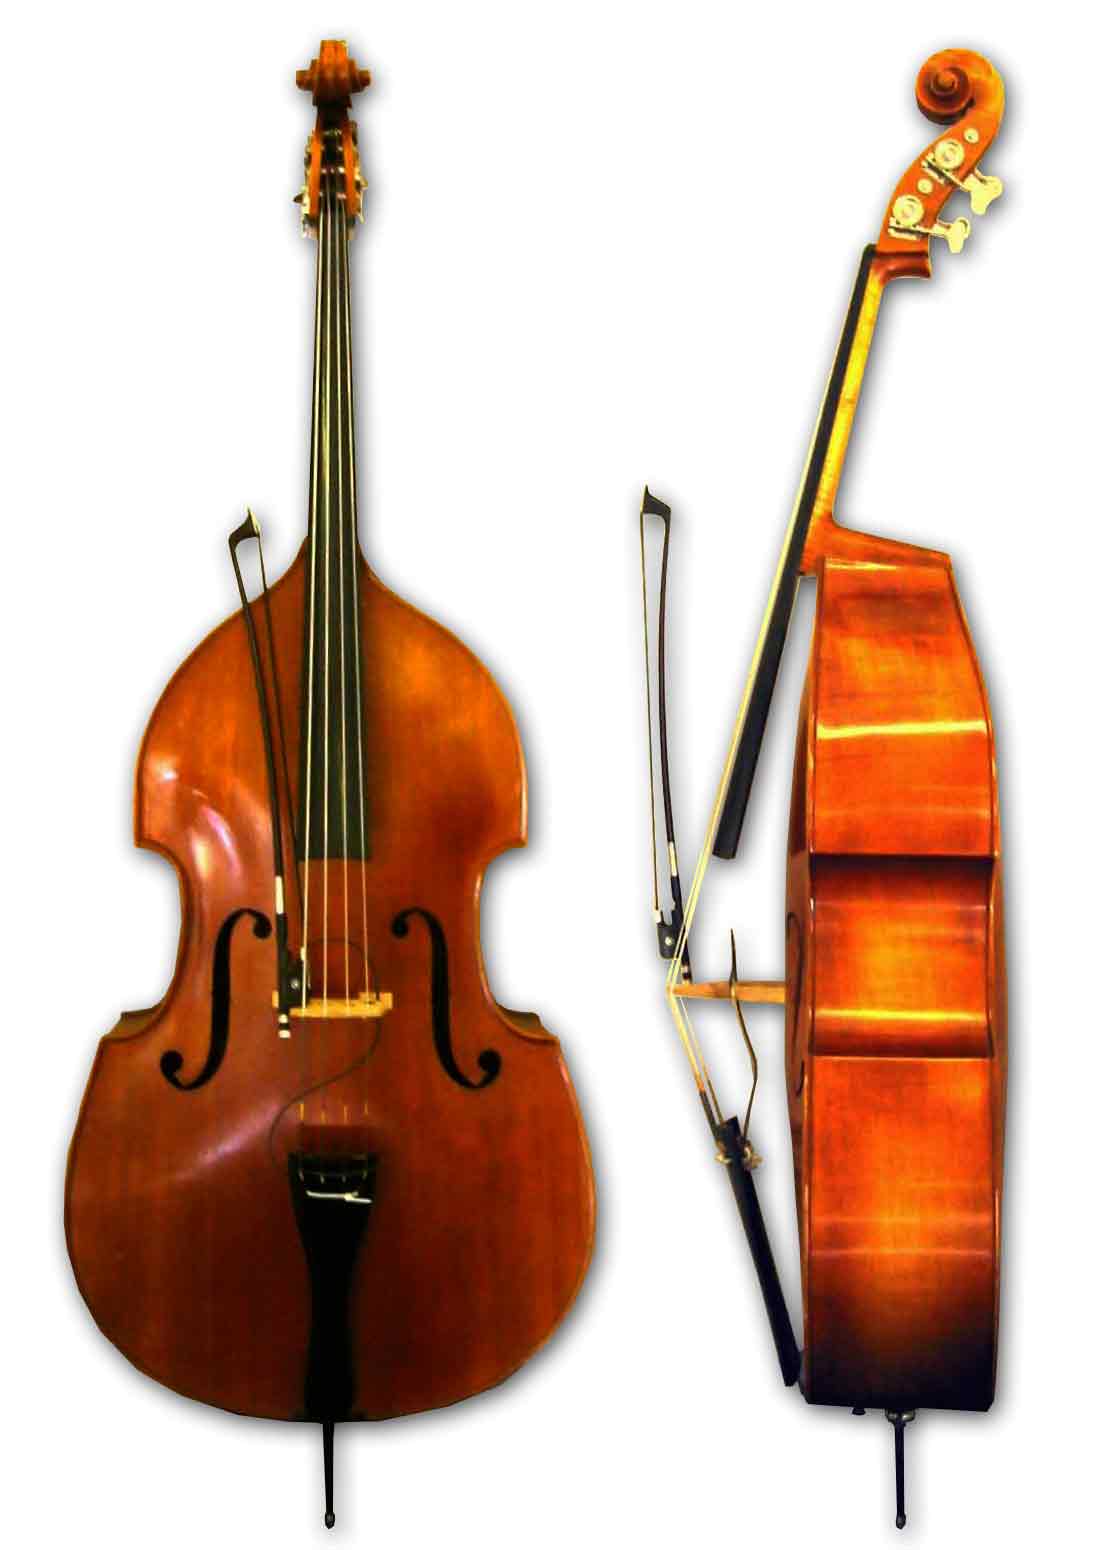 cr-2 sb-1-String Instrumentsimg_no 299.jpg